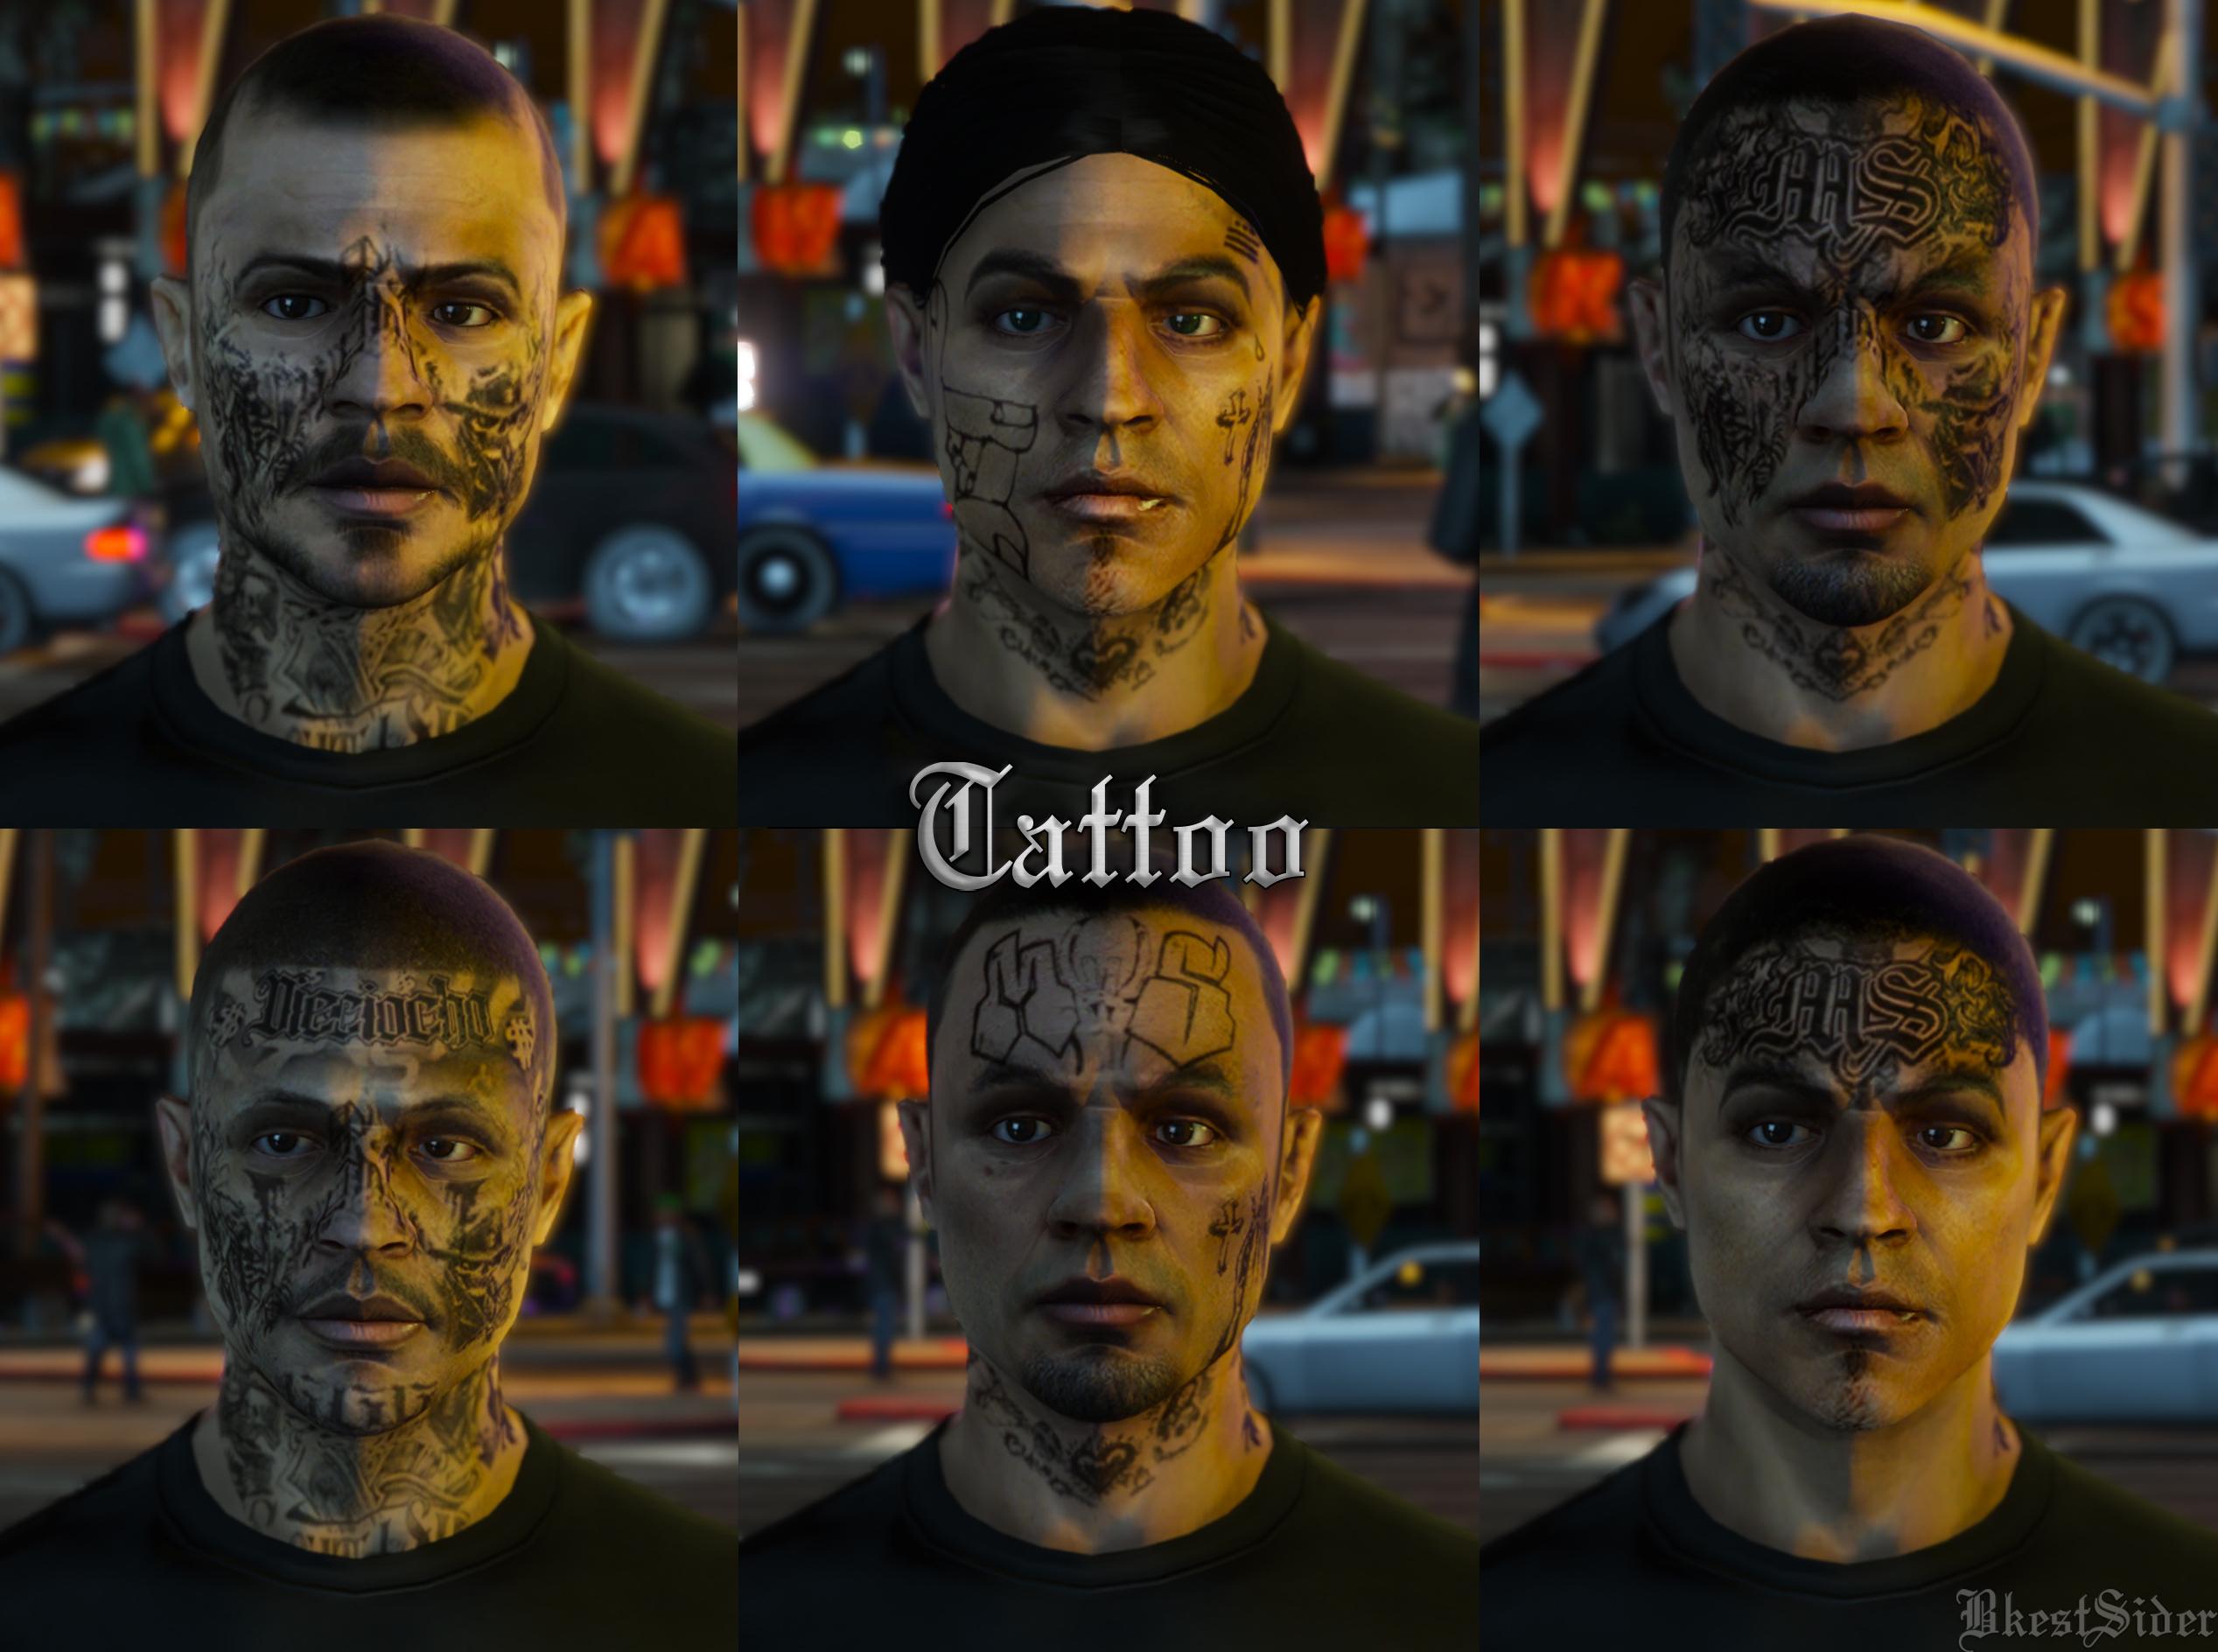 Tattoos (Gangs, Prison, Etc.,) Flashcards | Quizlet